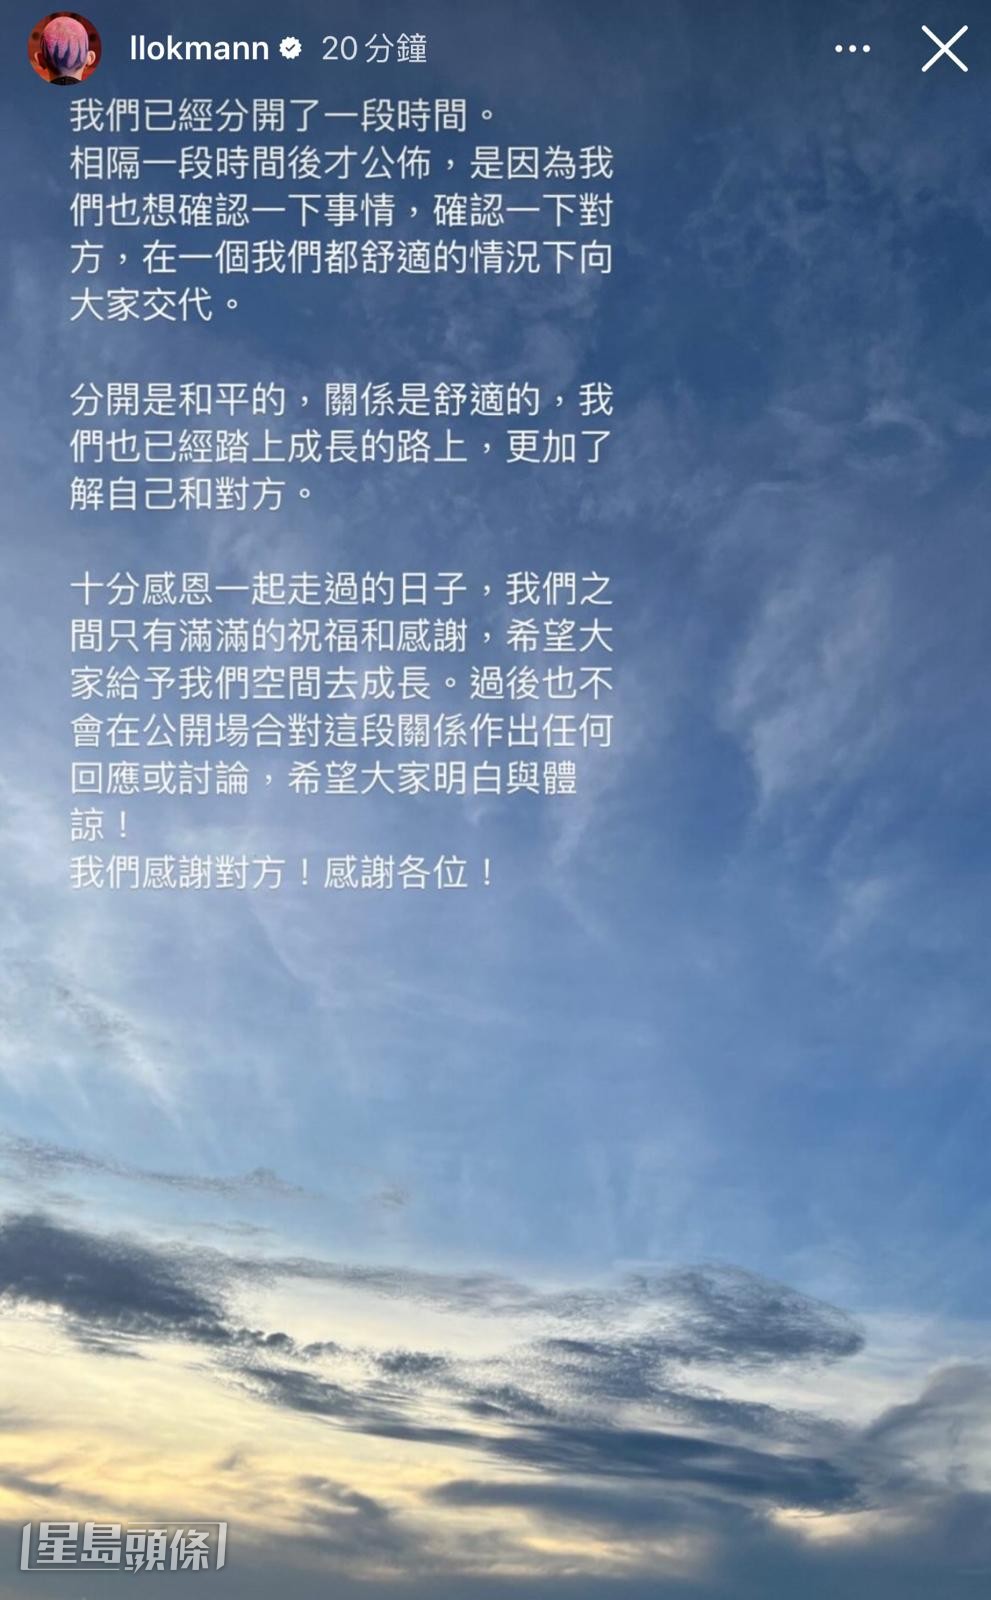 Lokman 社交平台上載了一張藍天與白雲的照片，發長文宣布「分」訊。